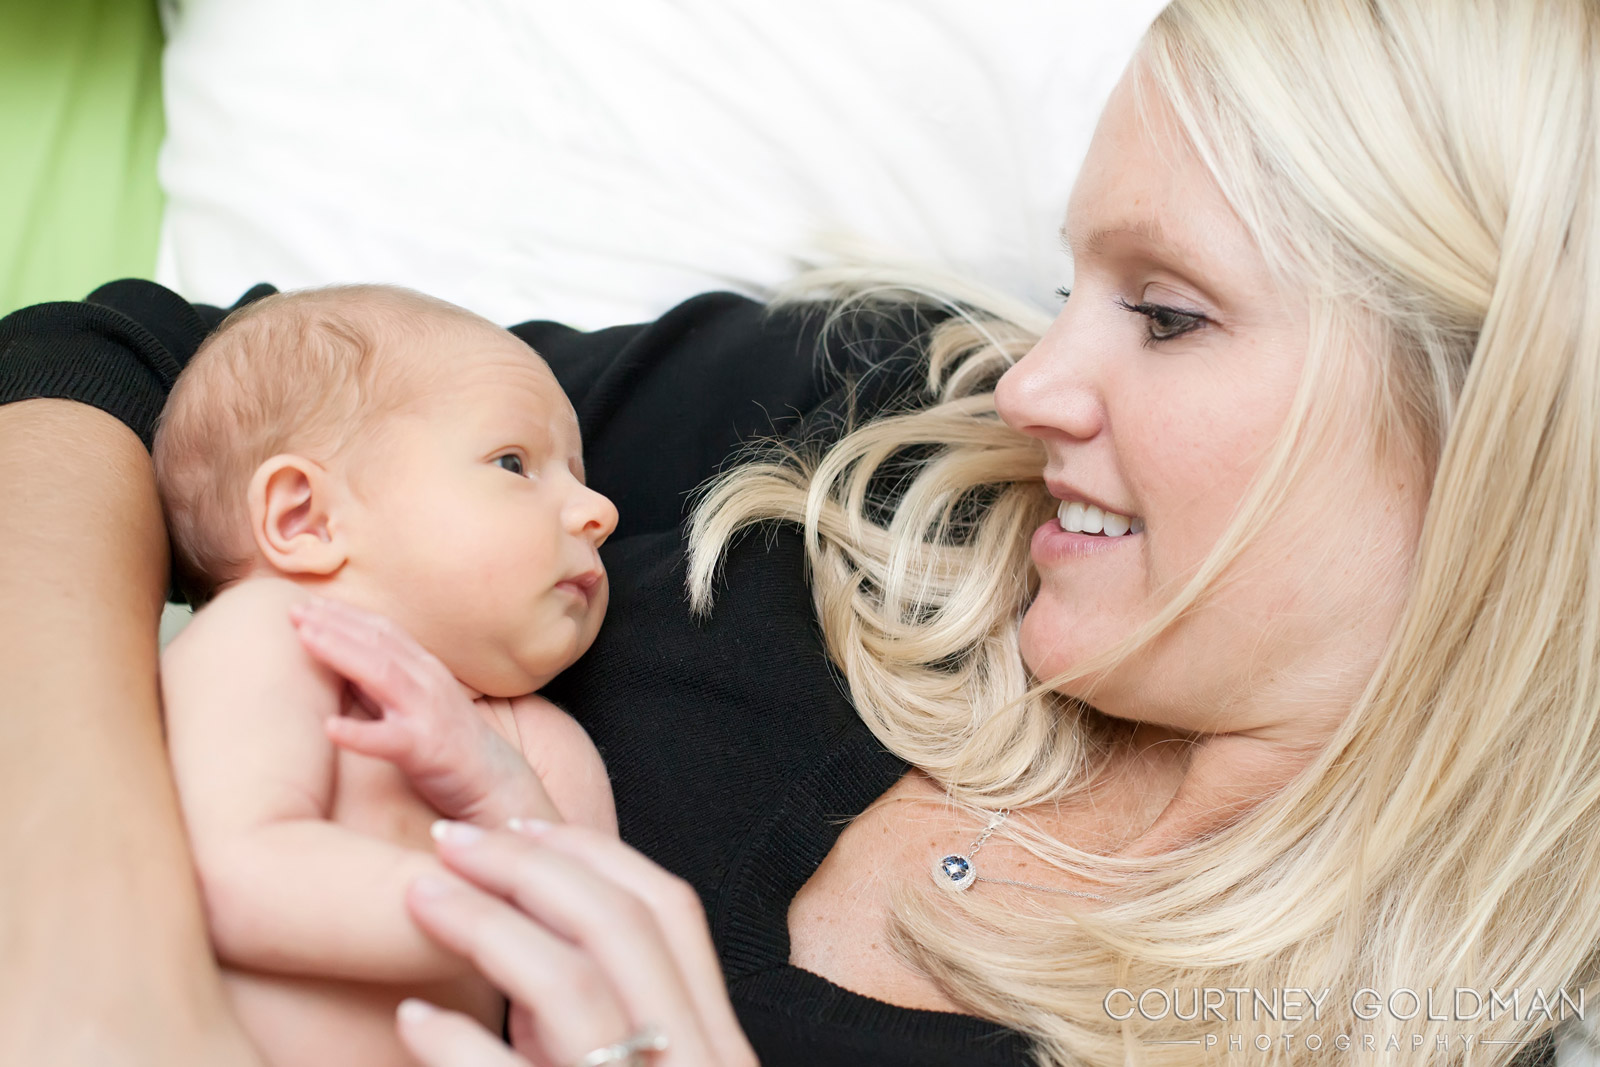 Atlanta Maternity and Newborn Photography by Courtney Goldman 51.jpg